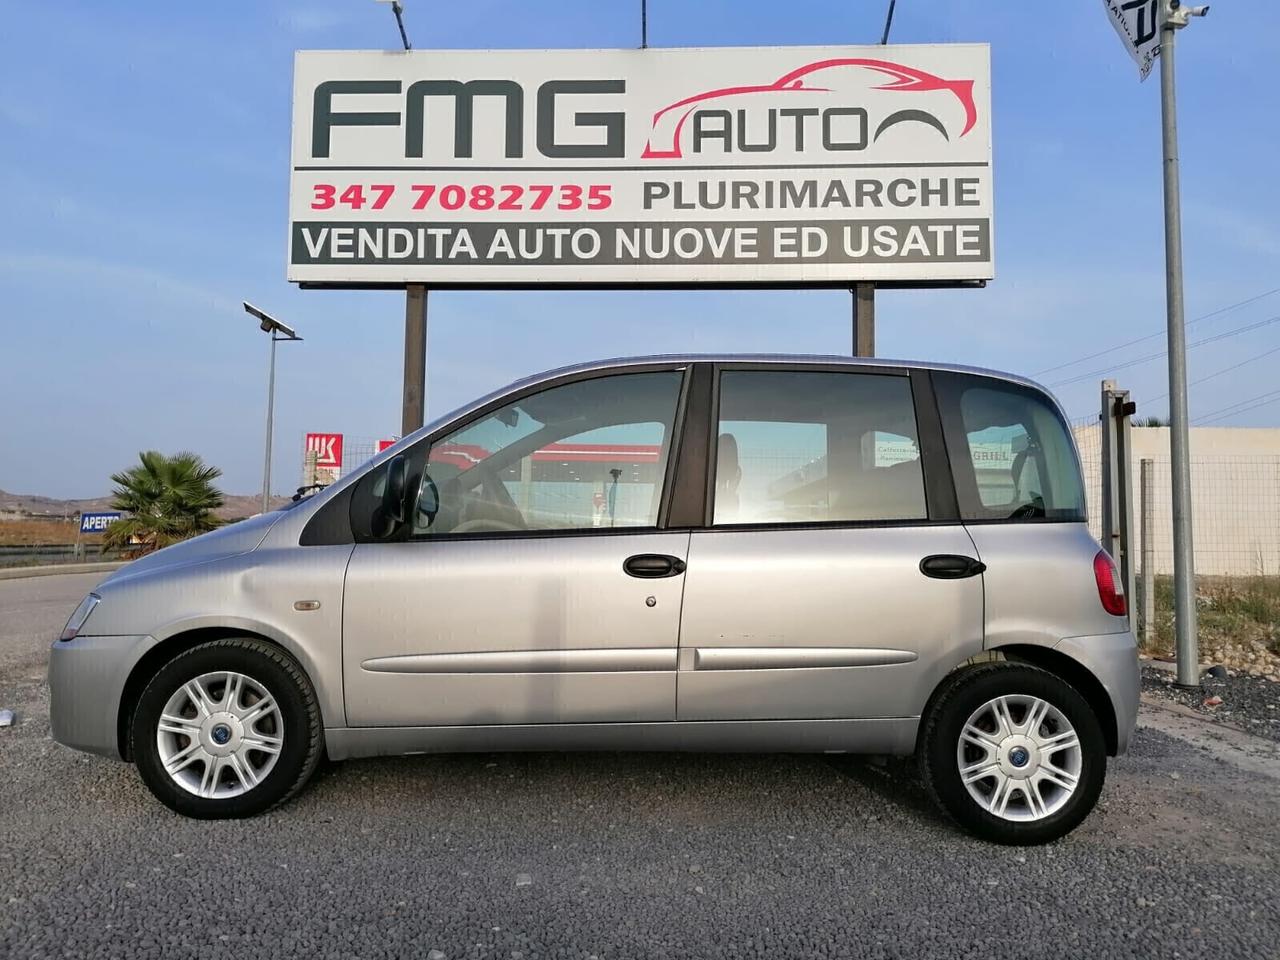 Fiat Multipla 1.9 MJT Emotion